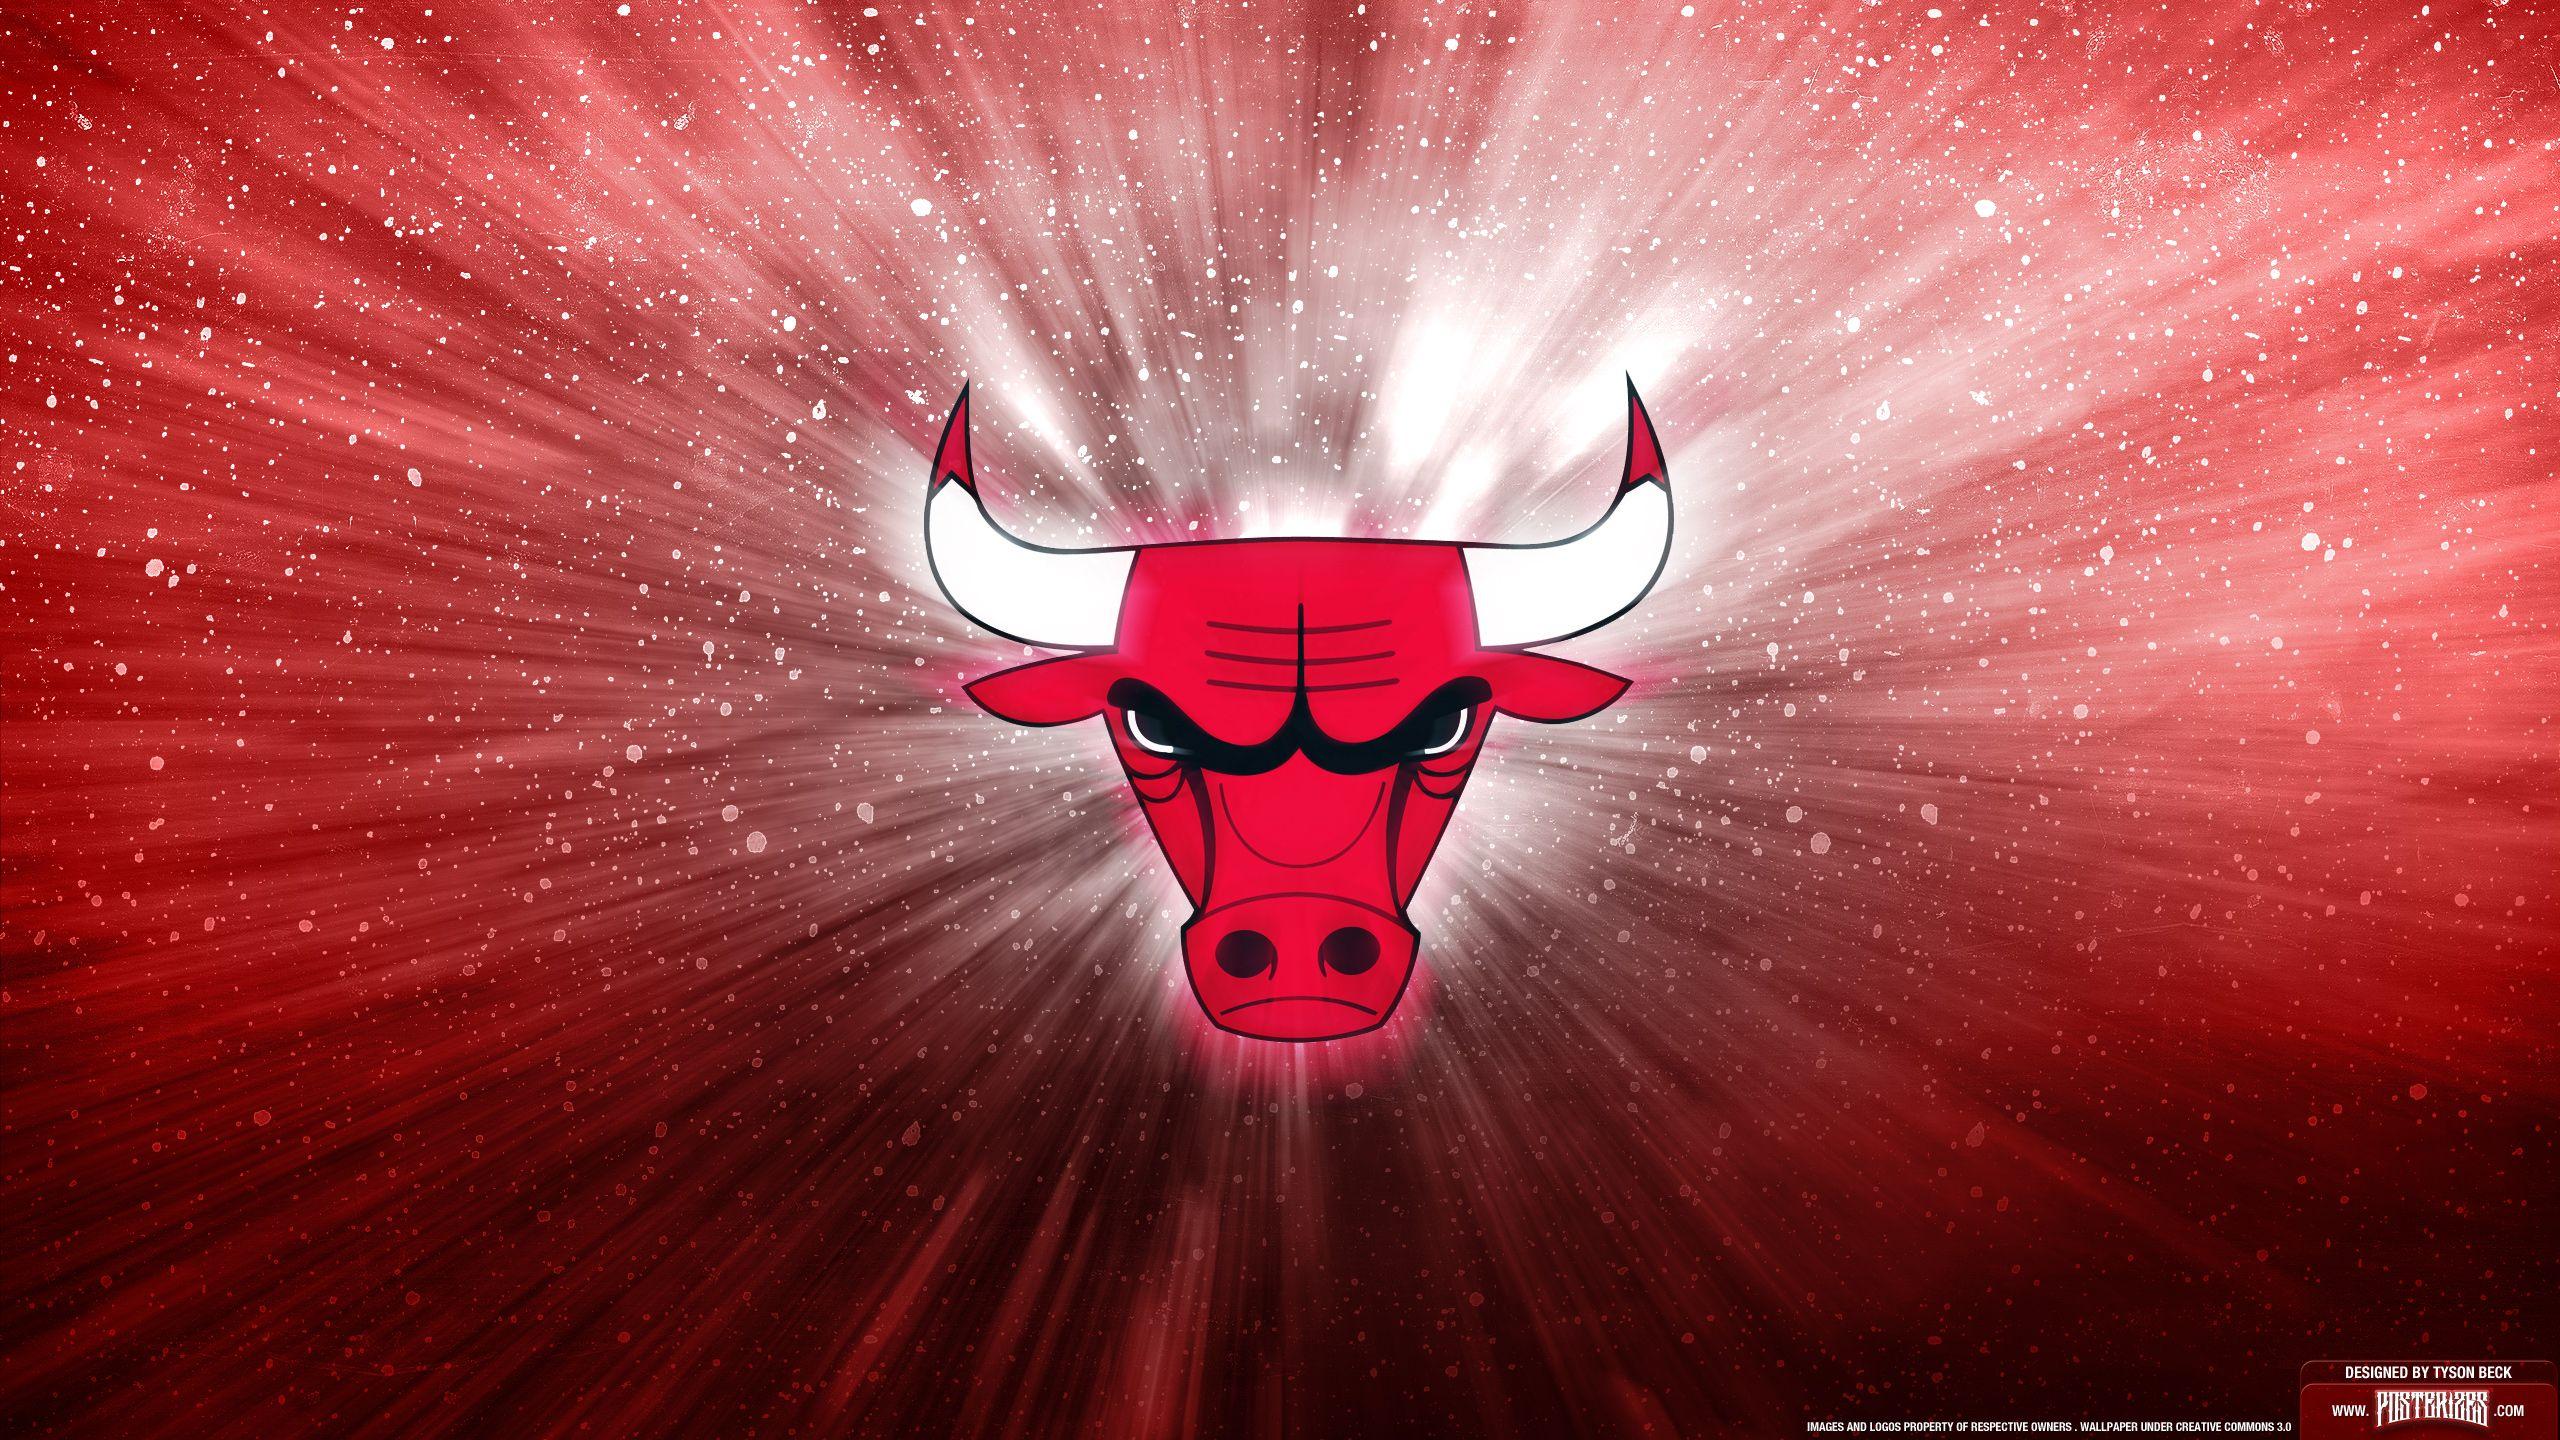 Chicago Bulls Wallpaper, Chicago Bulls Wallpaper. Download